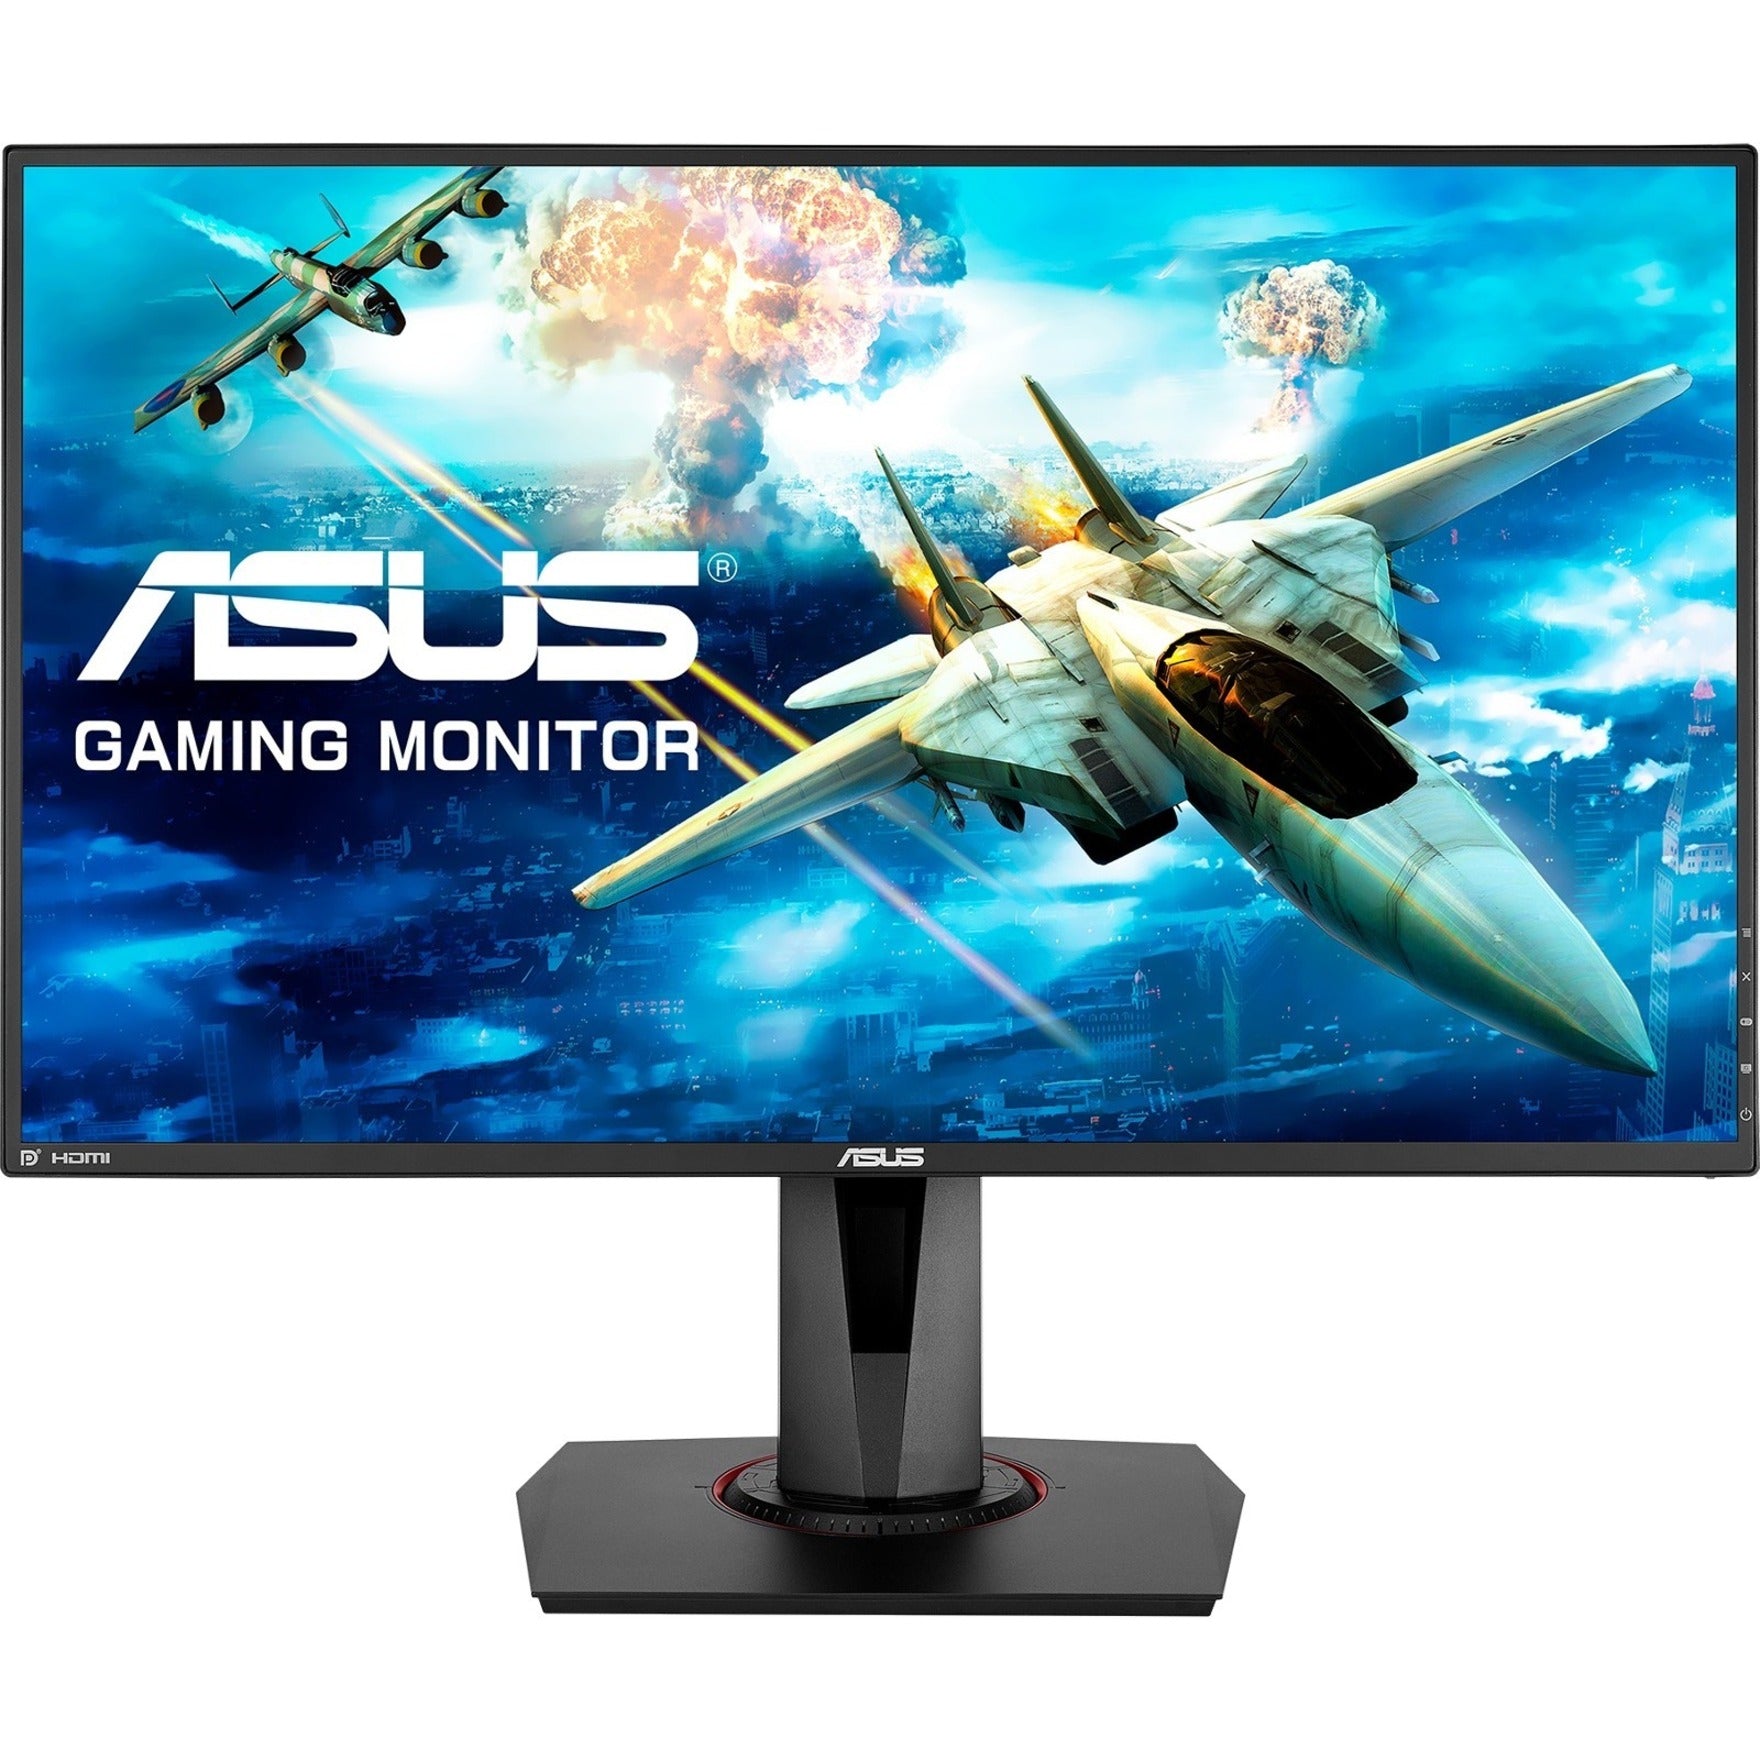 Asus VG278QR Gaming LCD Monitor 27", Full HD, G-sync Compatible, 400 Nit Brightness, 72% NTSC Color Gamut